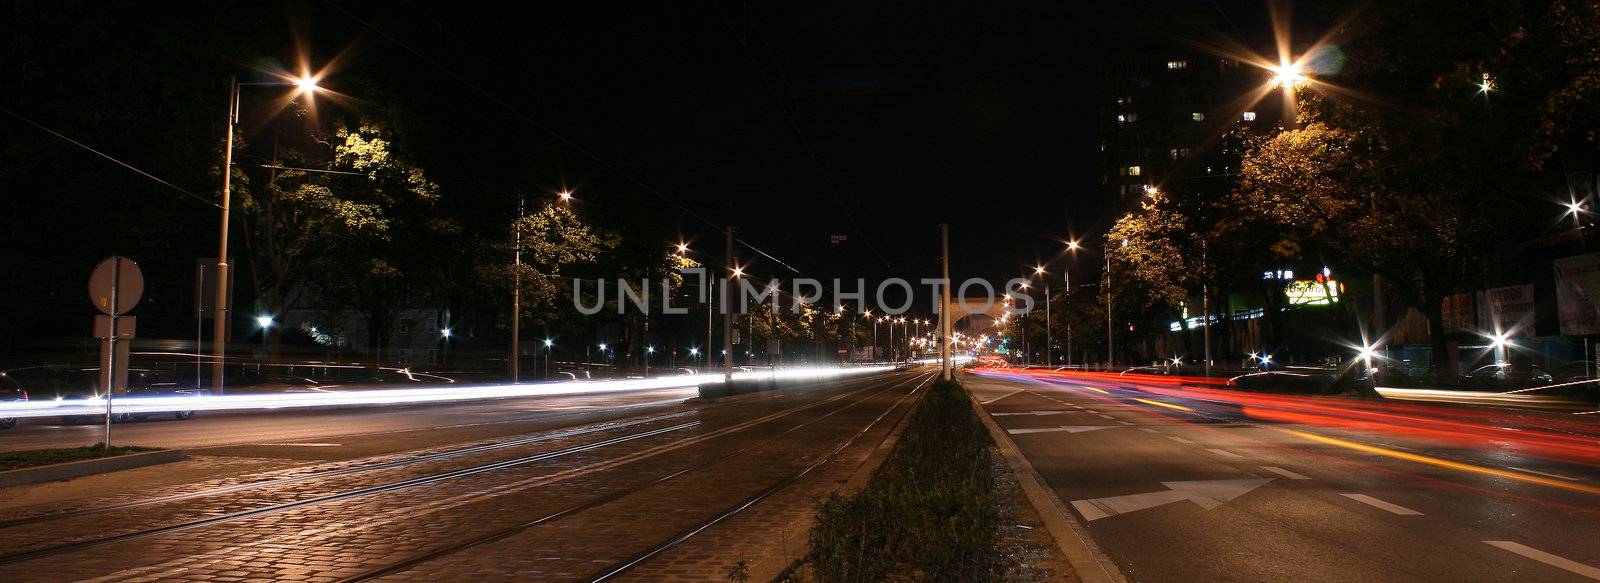 city at night, traffic by miczu